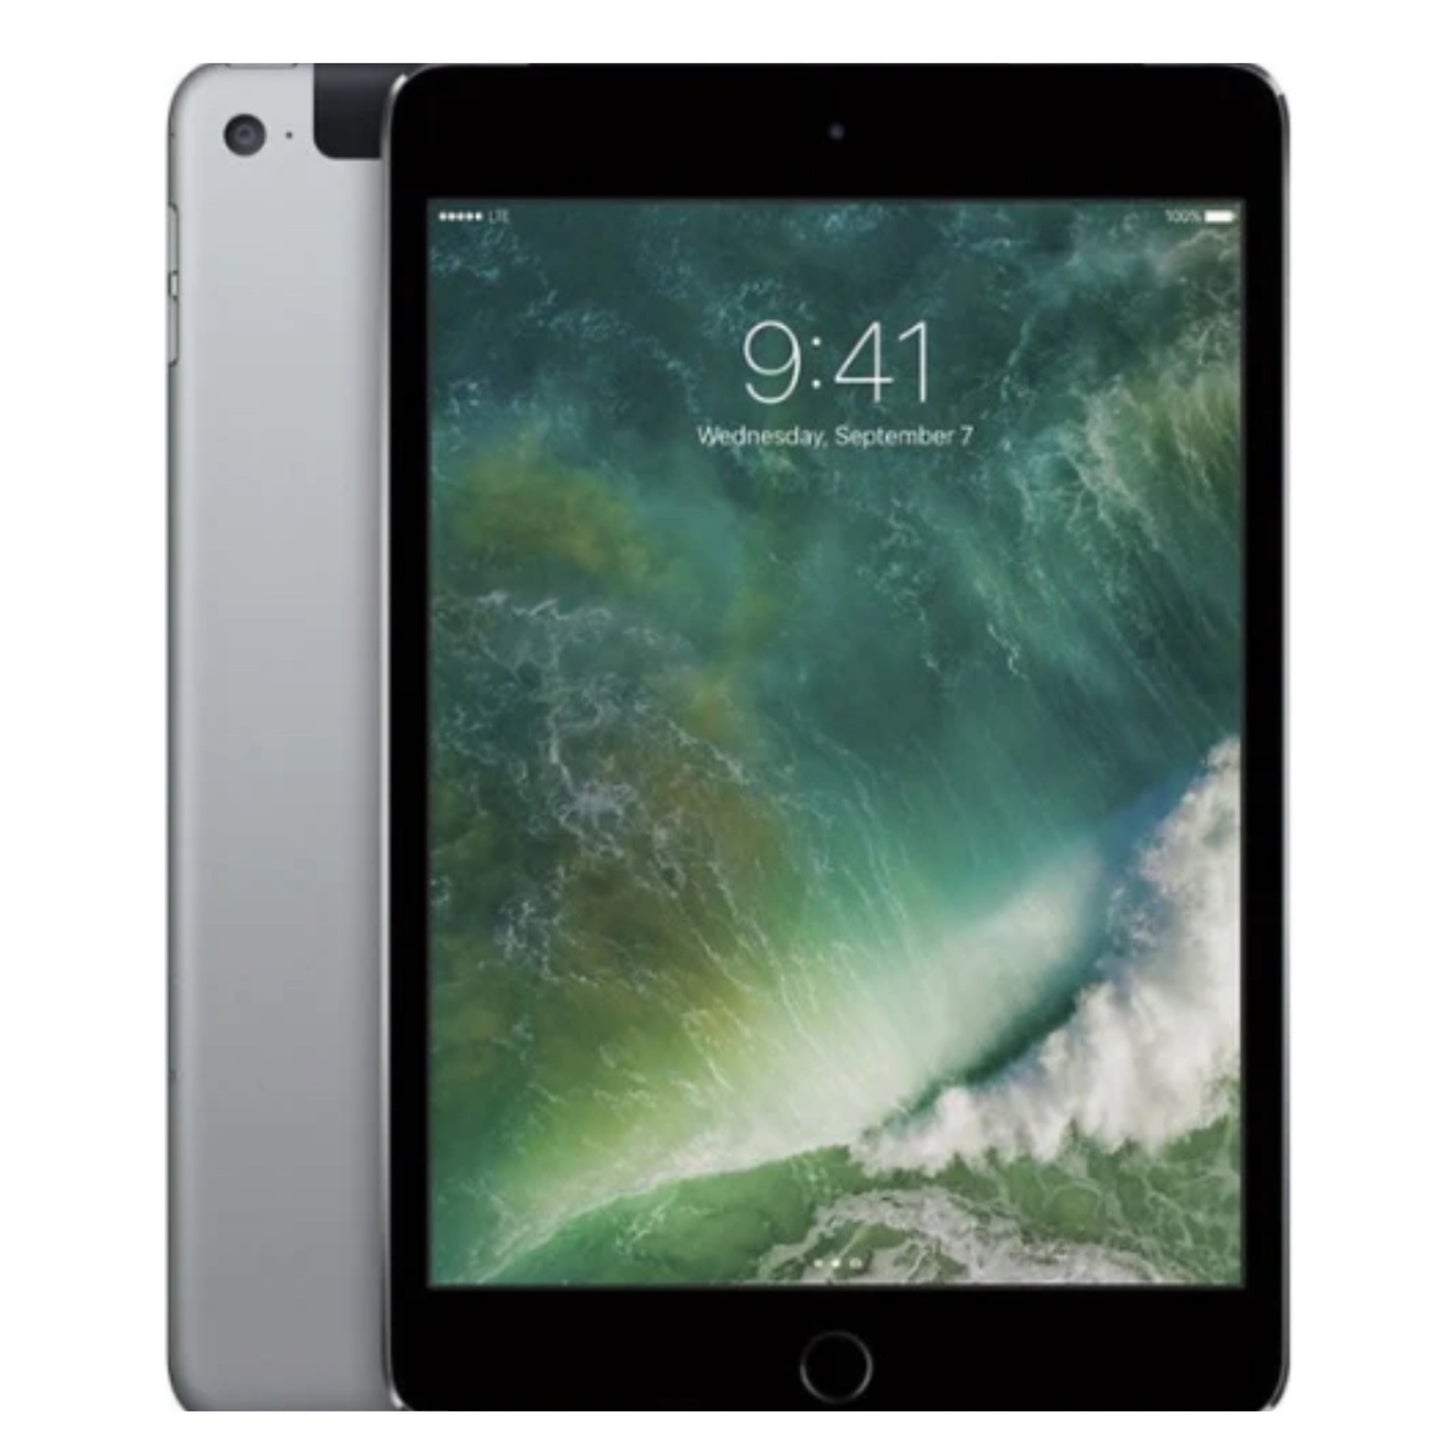 iPad Mini 4th Gen, 7.9" 128GB Space Gray (Cellular Unlocked + Wi-Fi) Pre-Owned